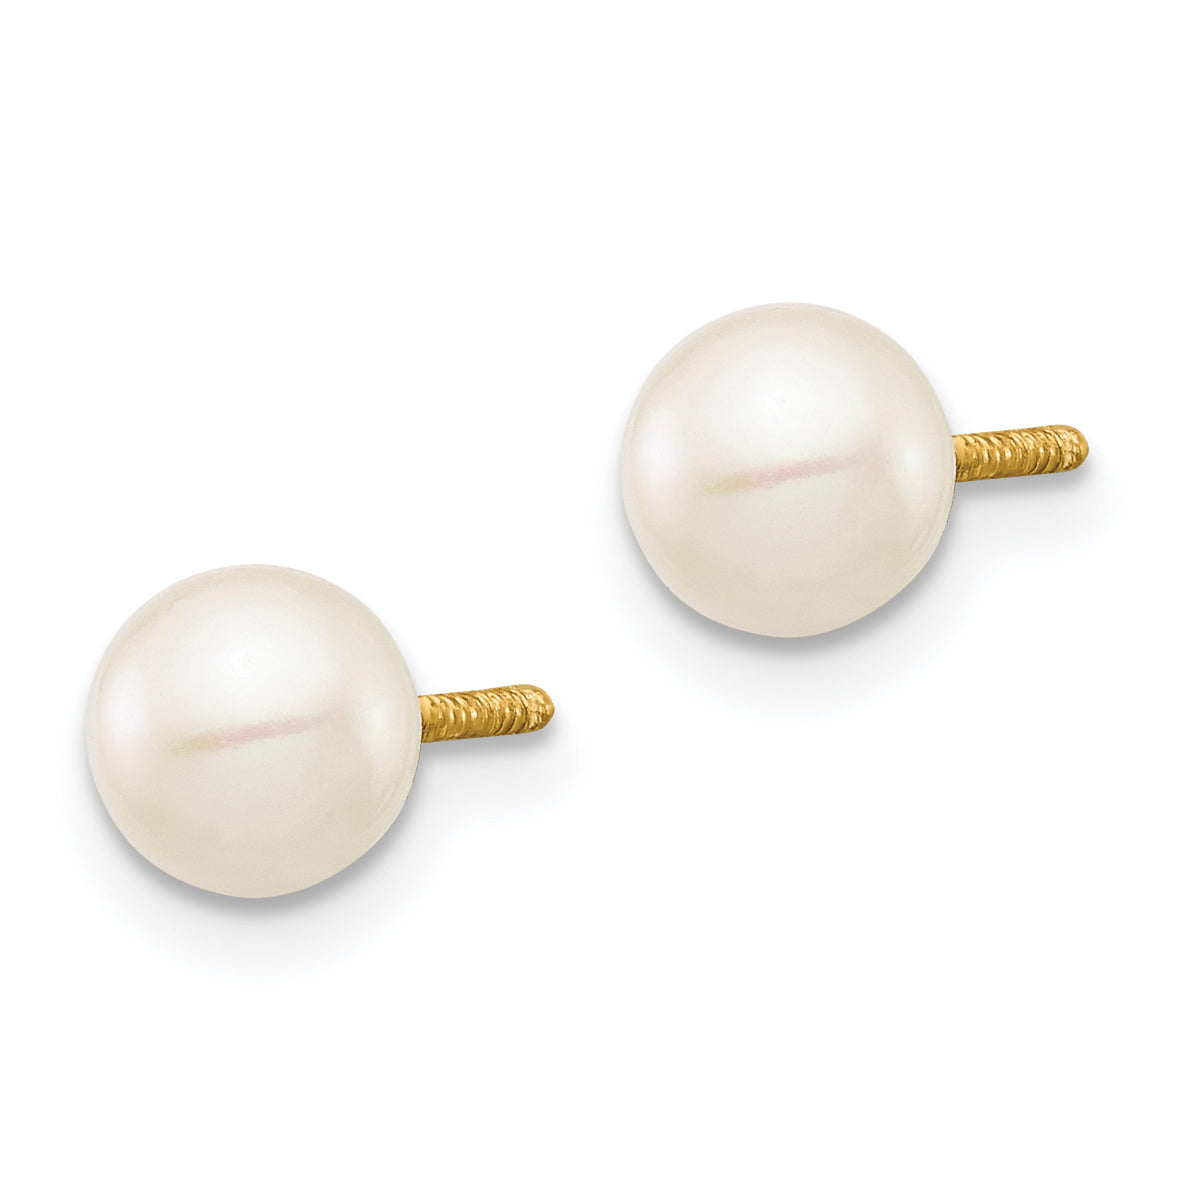 14k Madi K 5-6mm White Near Round Freshwater Cultured Pearl Post Earrings